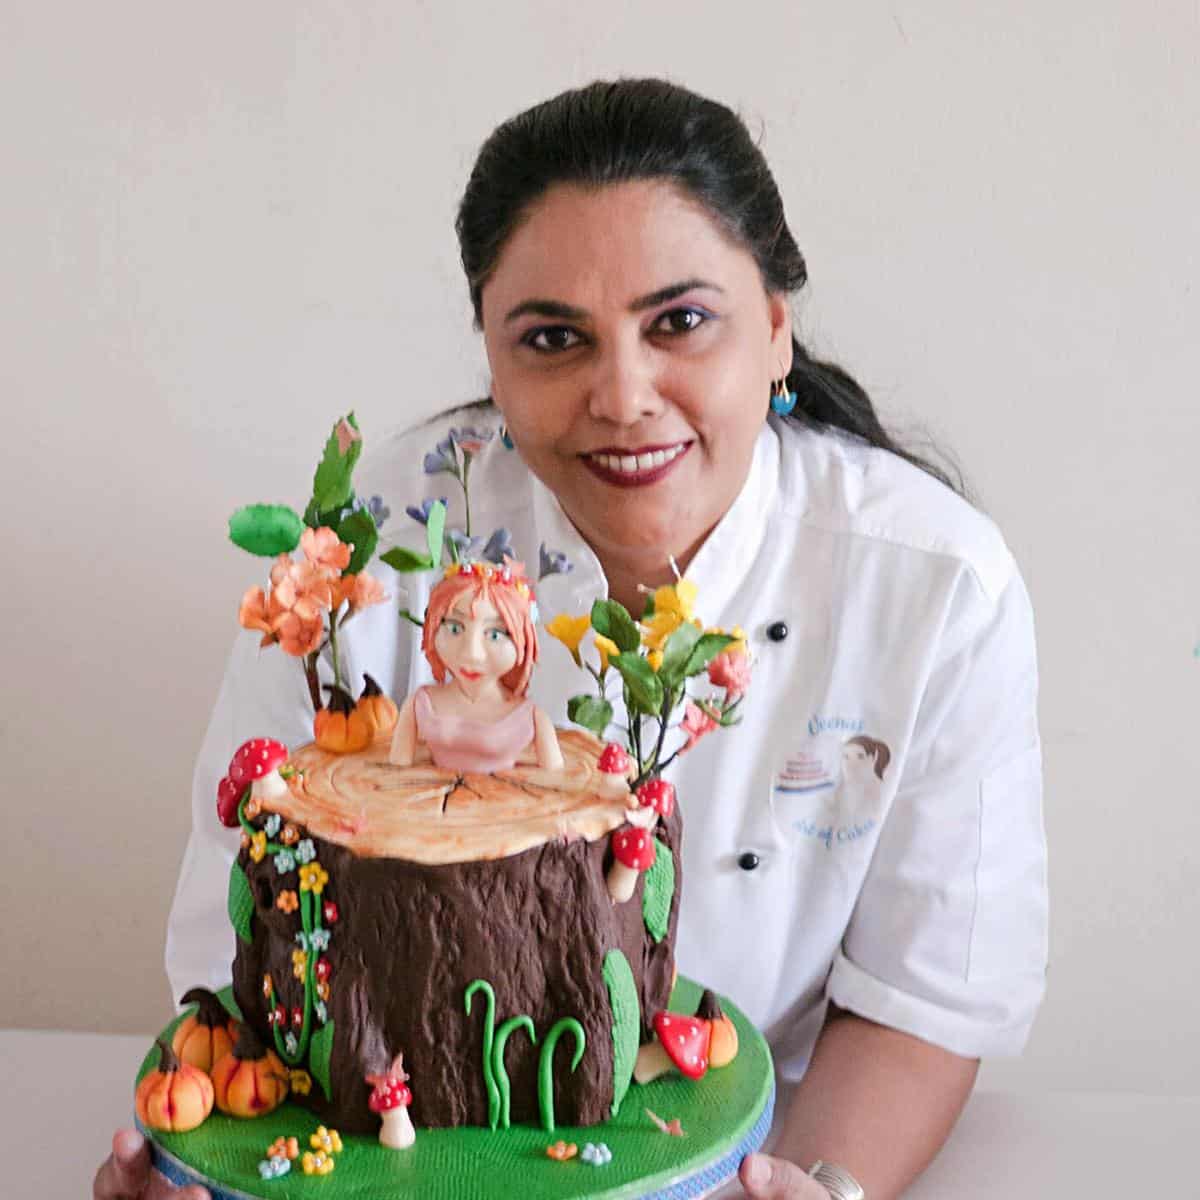 Cake Decorator Turned Blogger